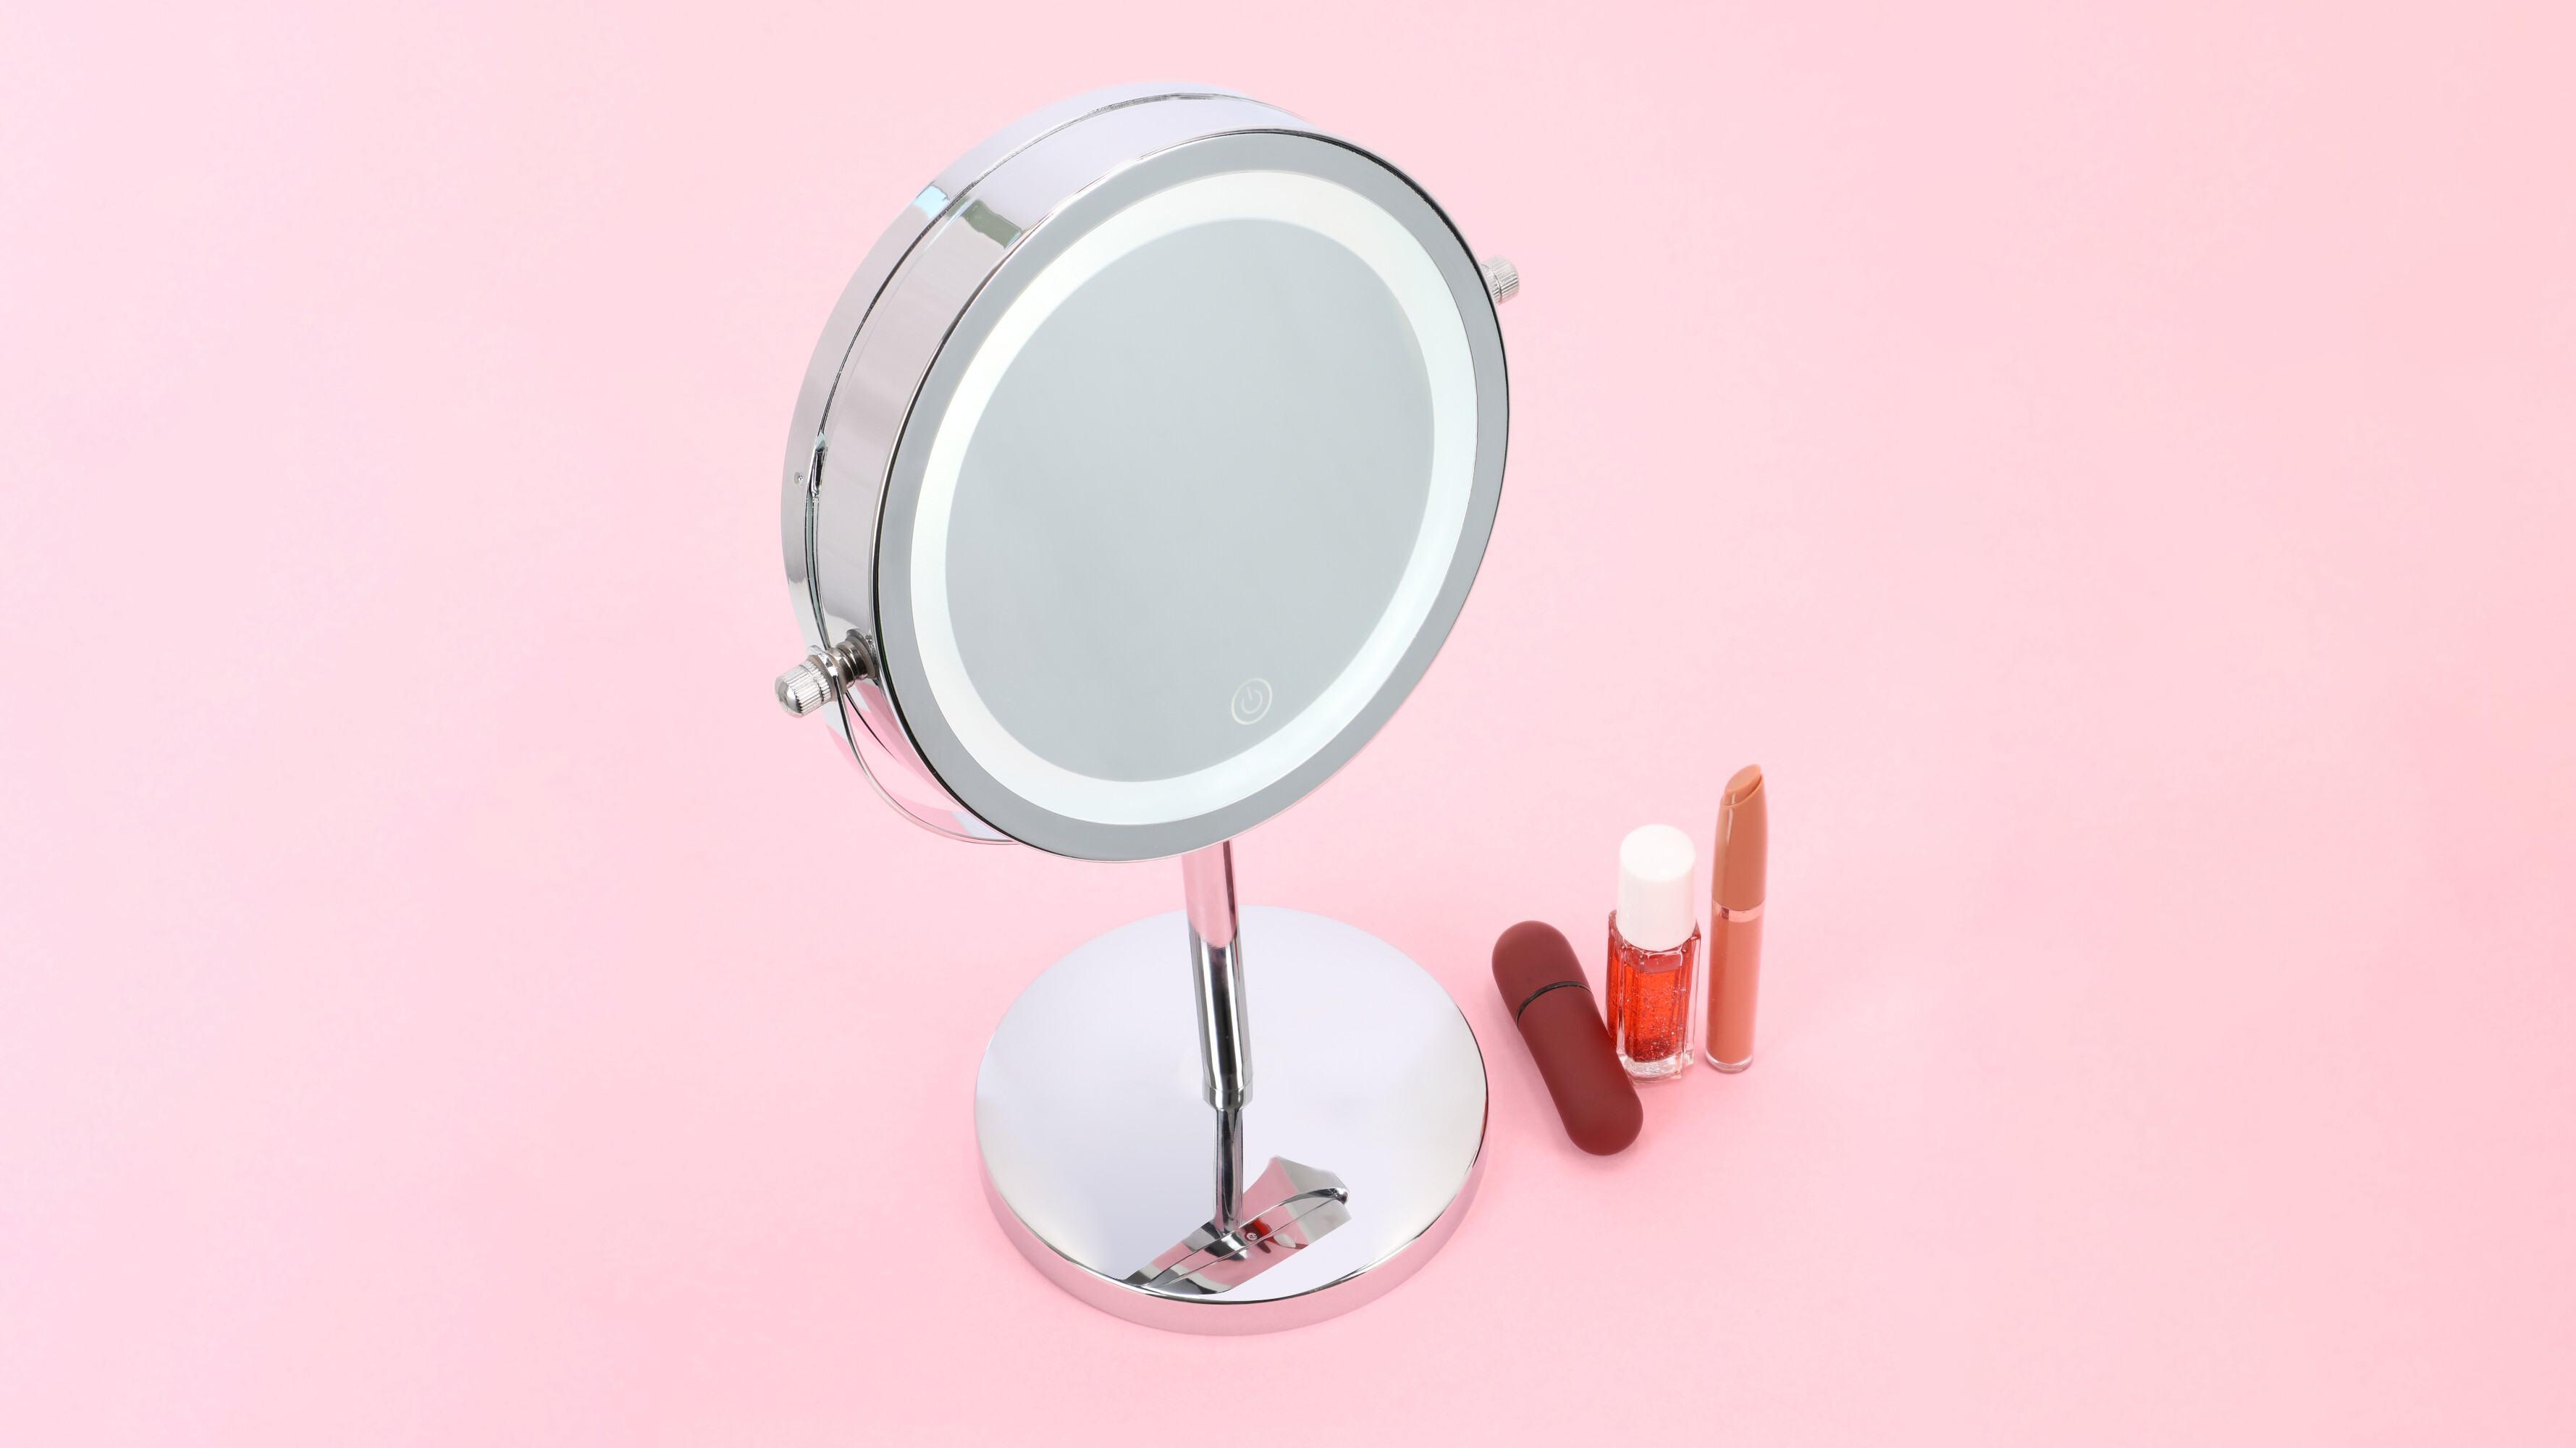 Espejo de Vanidad Giratorio con Luz Touch integrada para Baño con